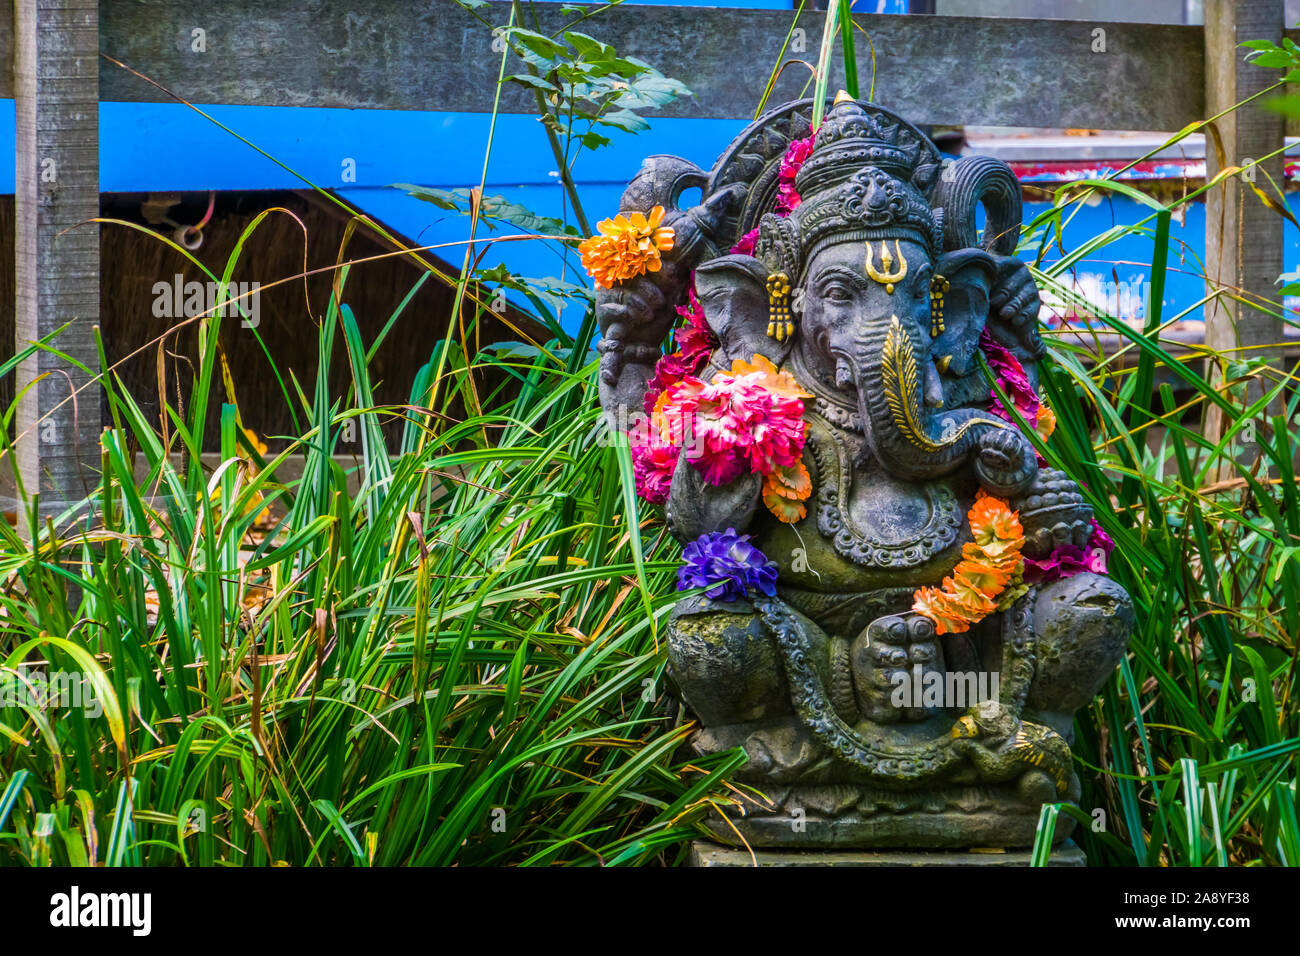 beautiful Ganesha sculpture, Indian elephant god, spiritual garden decorations Stock Photo